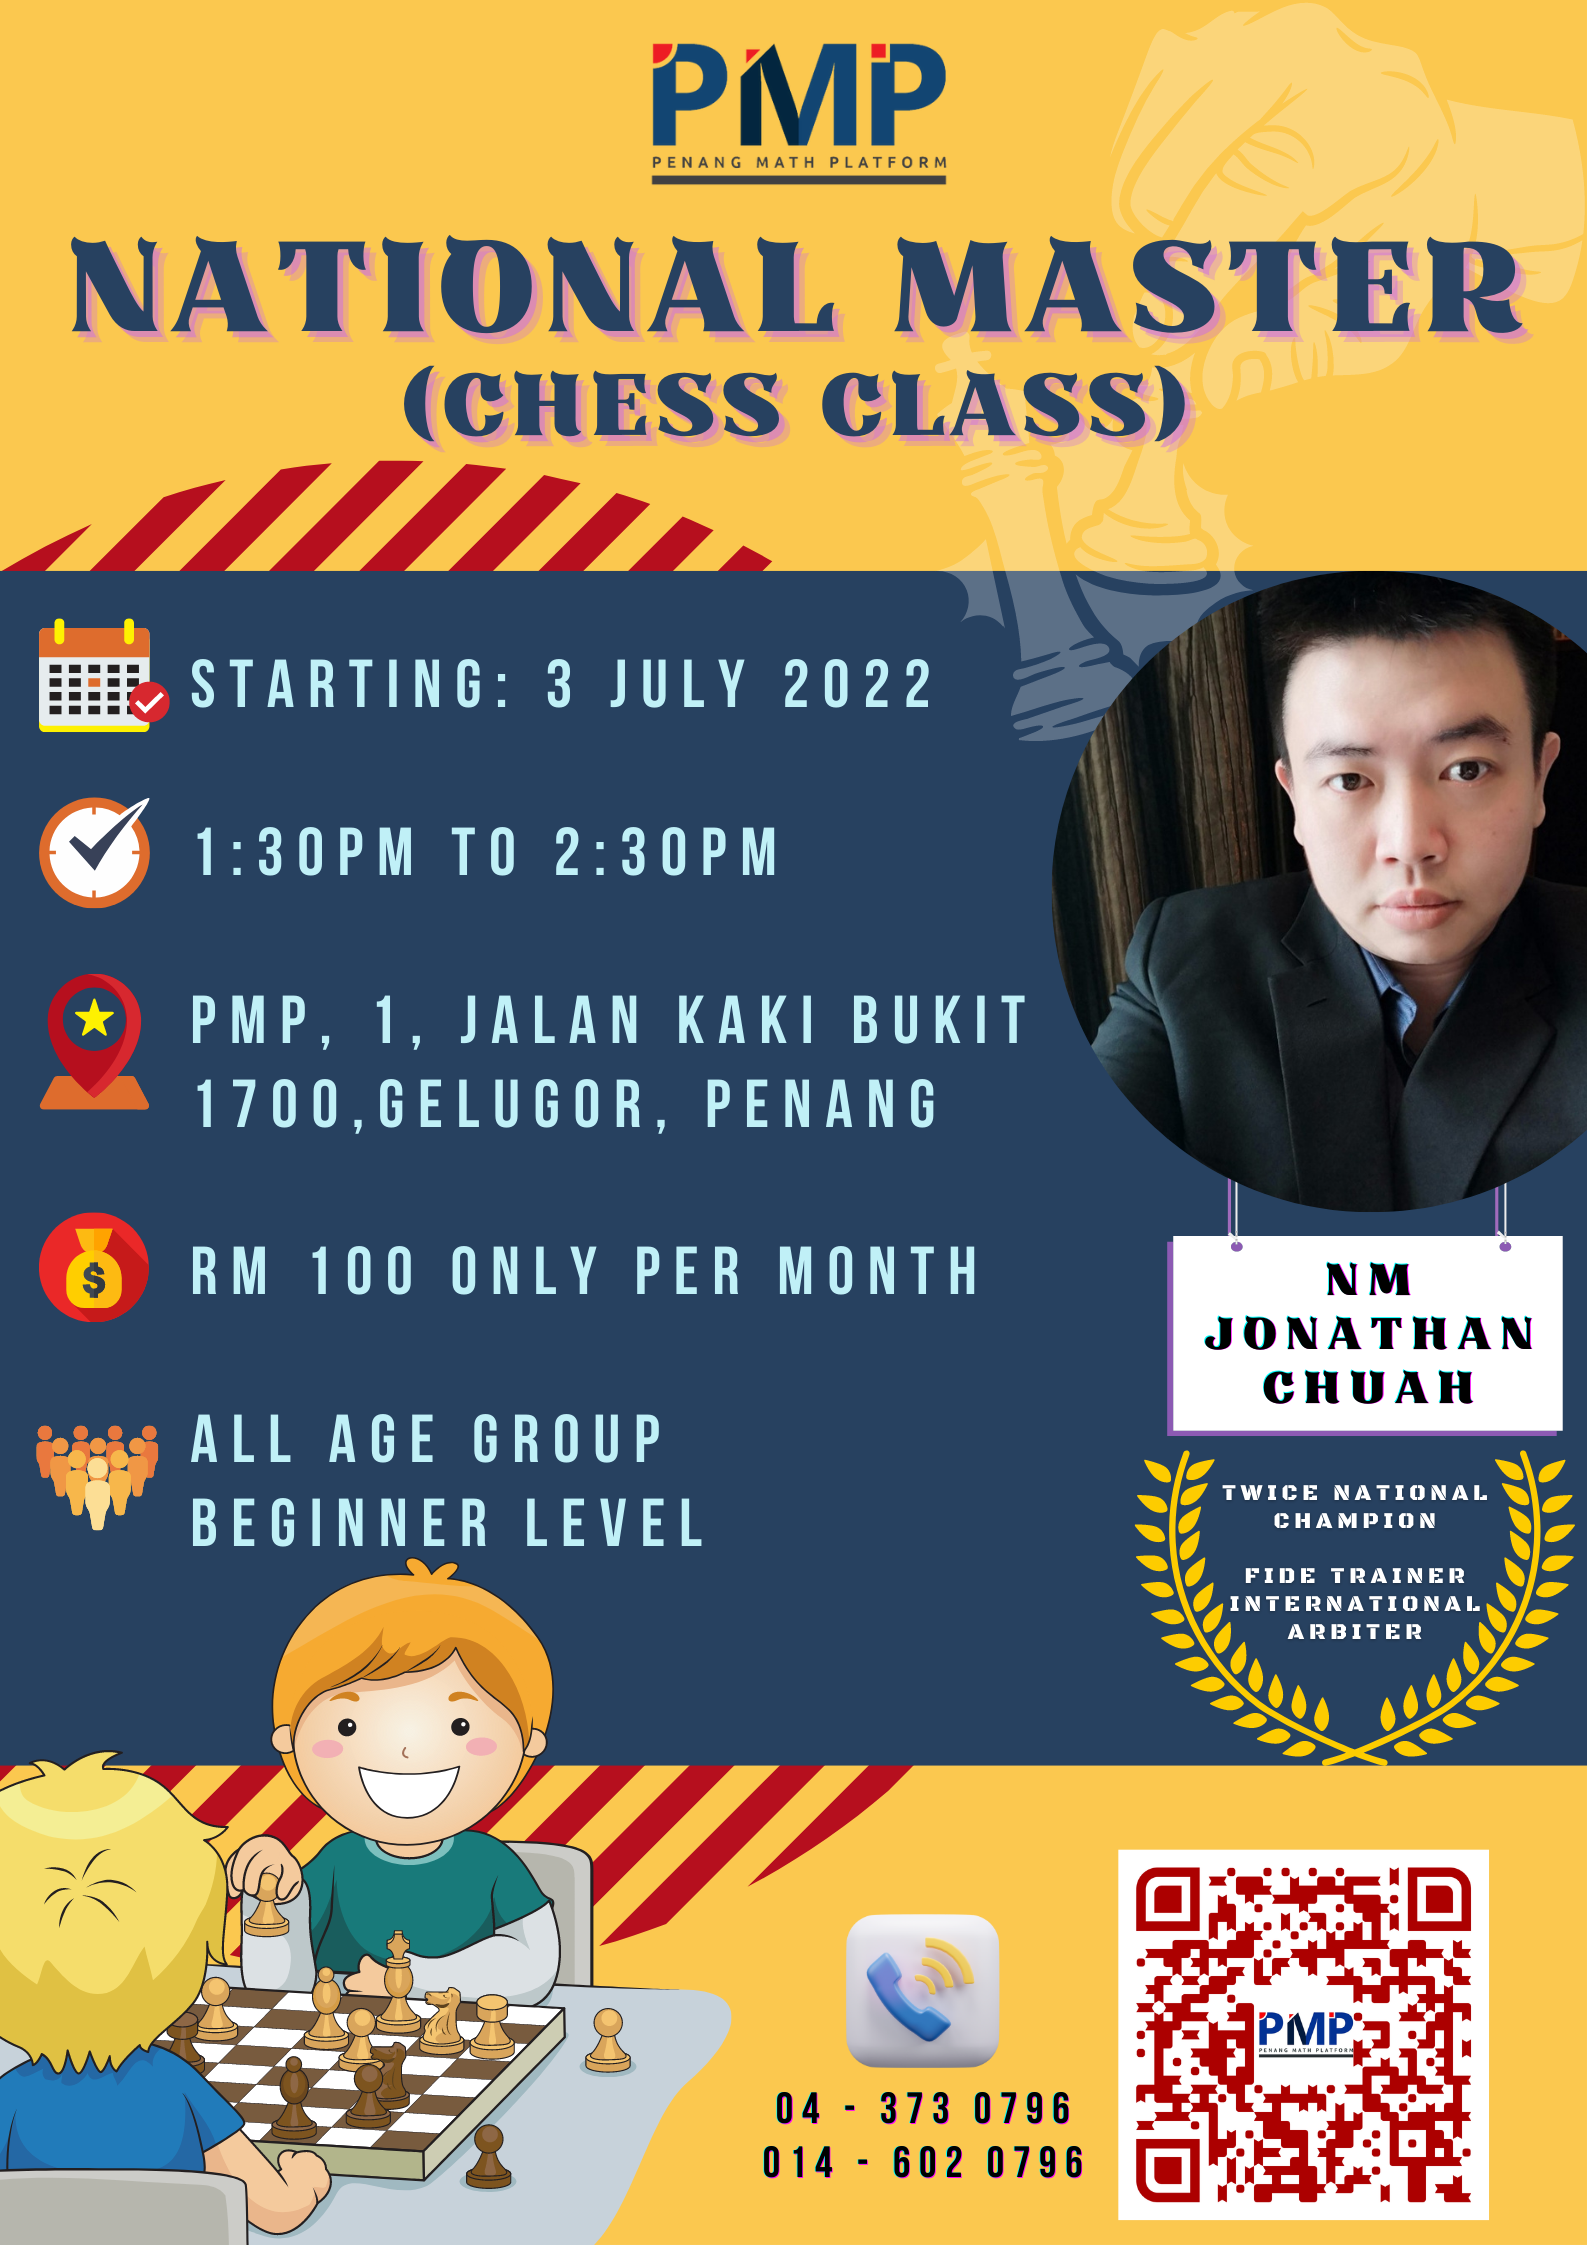 National Master (Chess Class) | Penang Math Platform